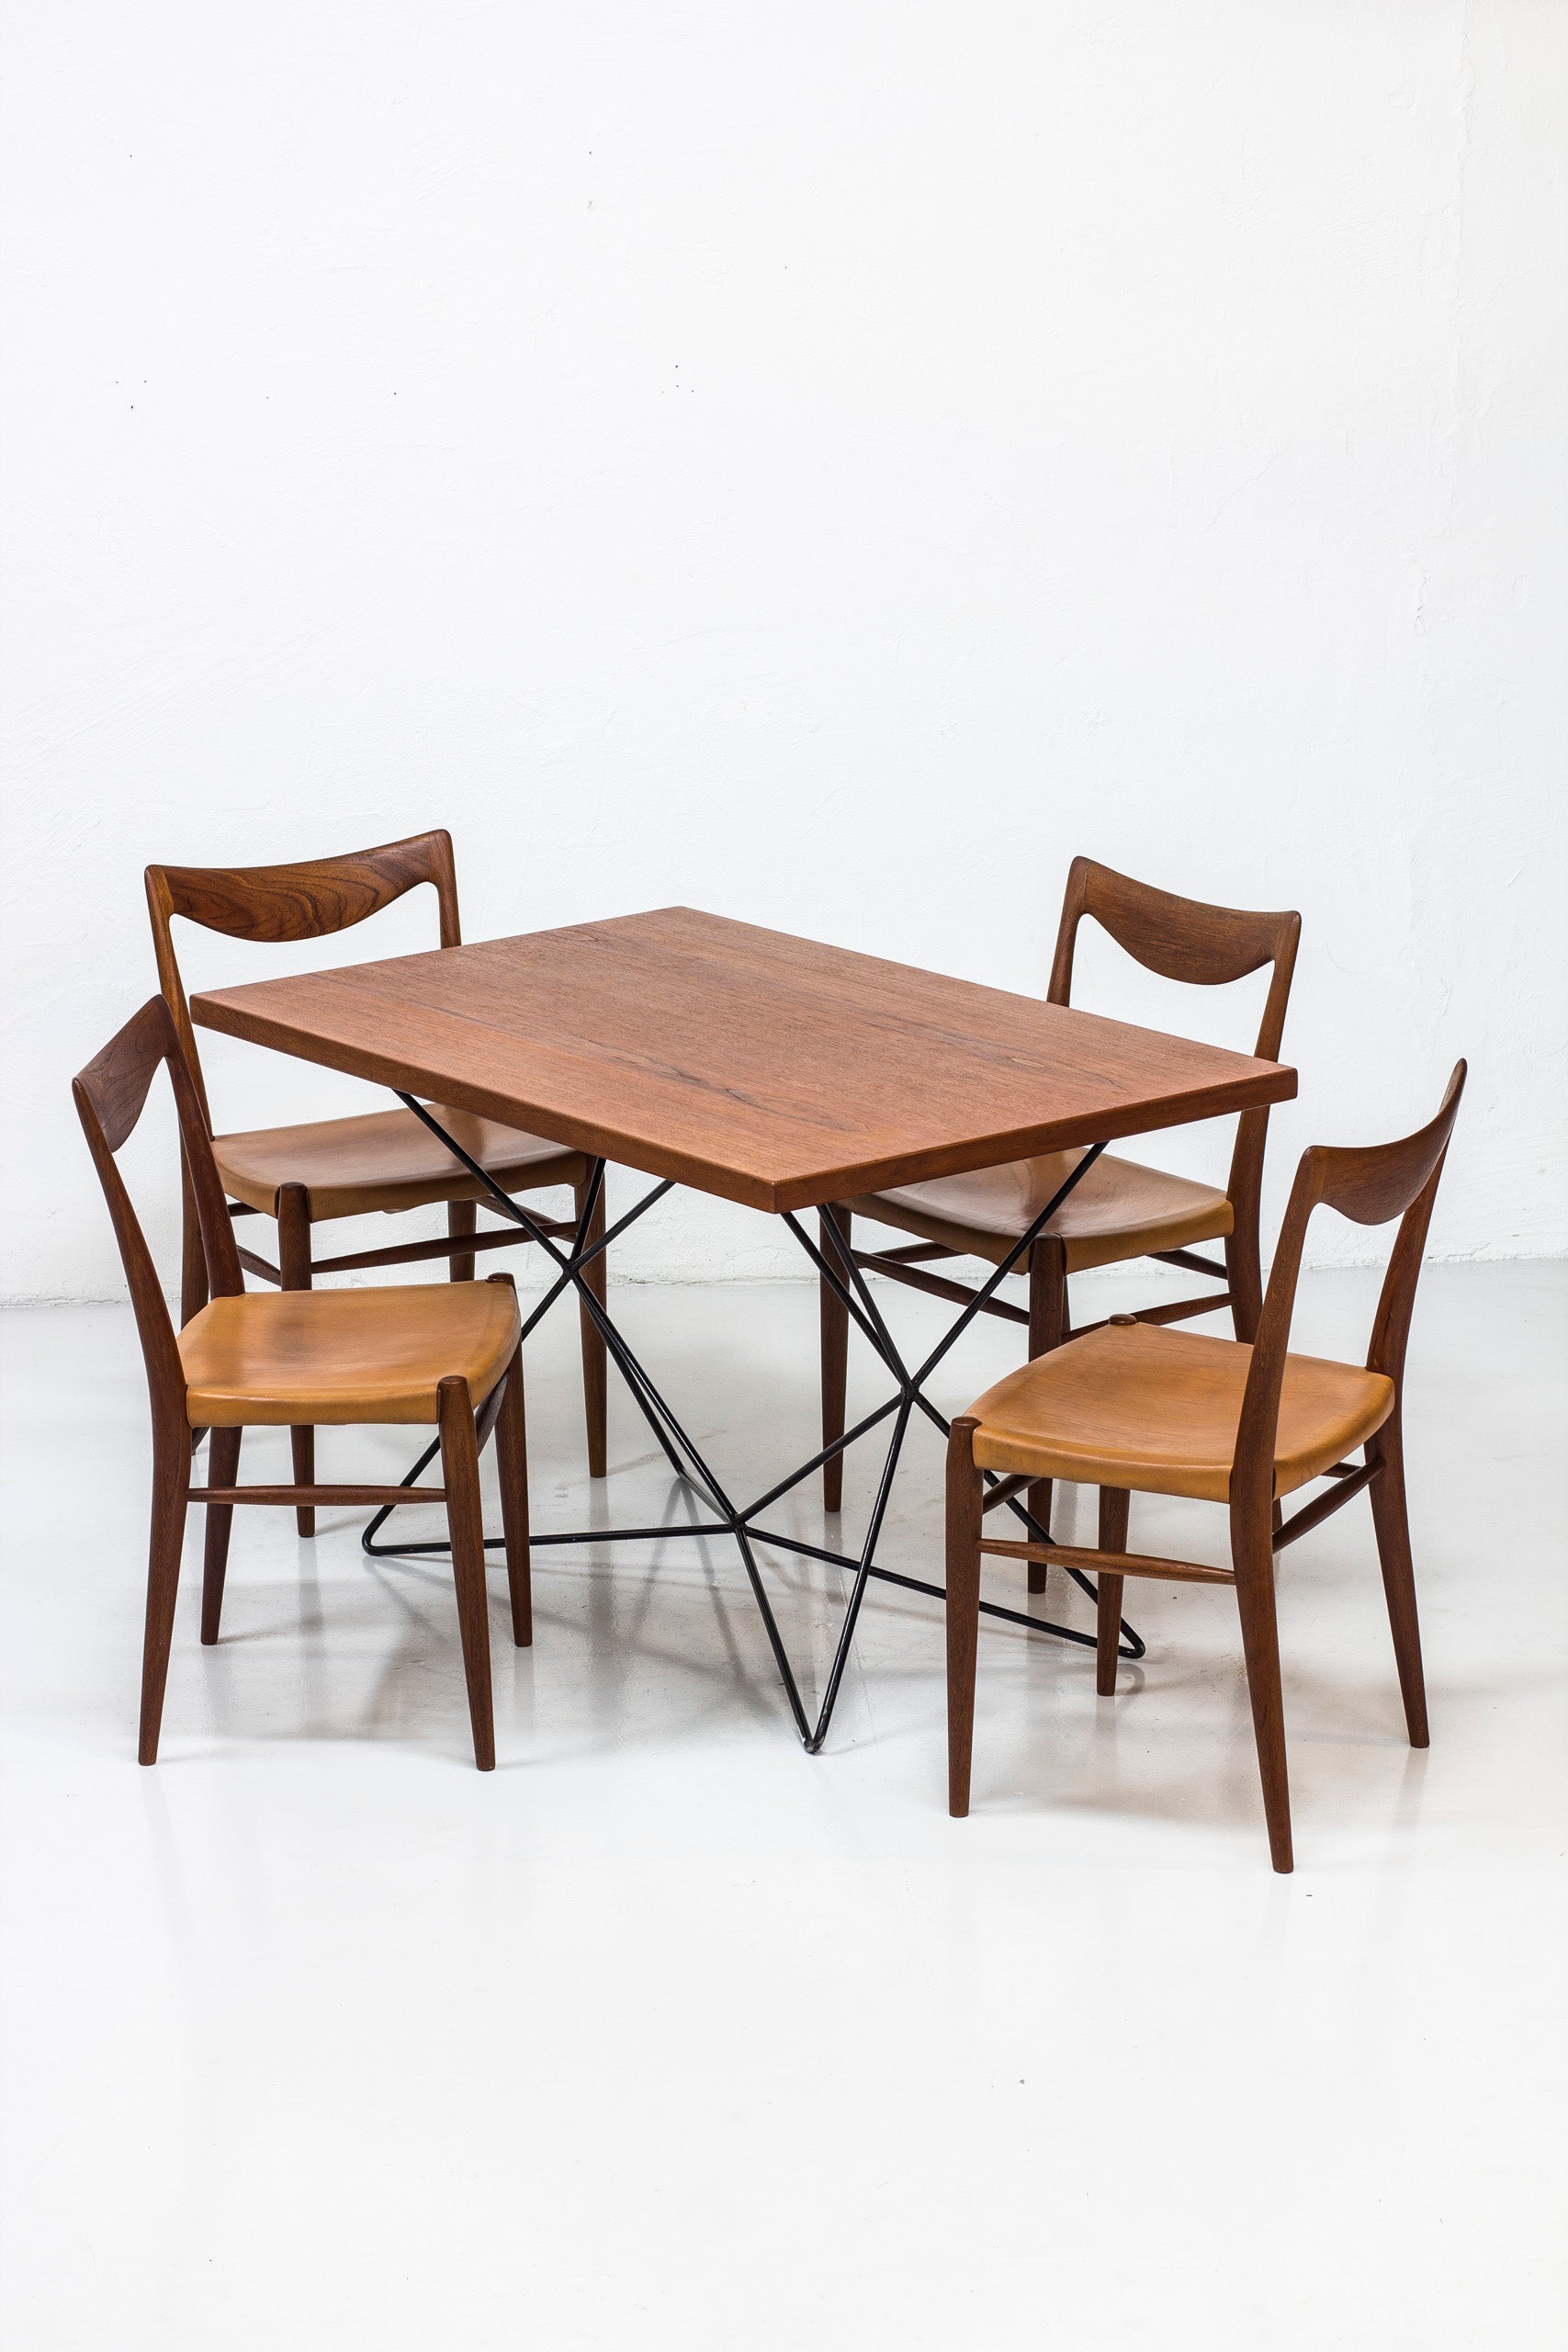 "A2" multi table by Bengt Johan Gullberg